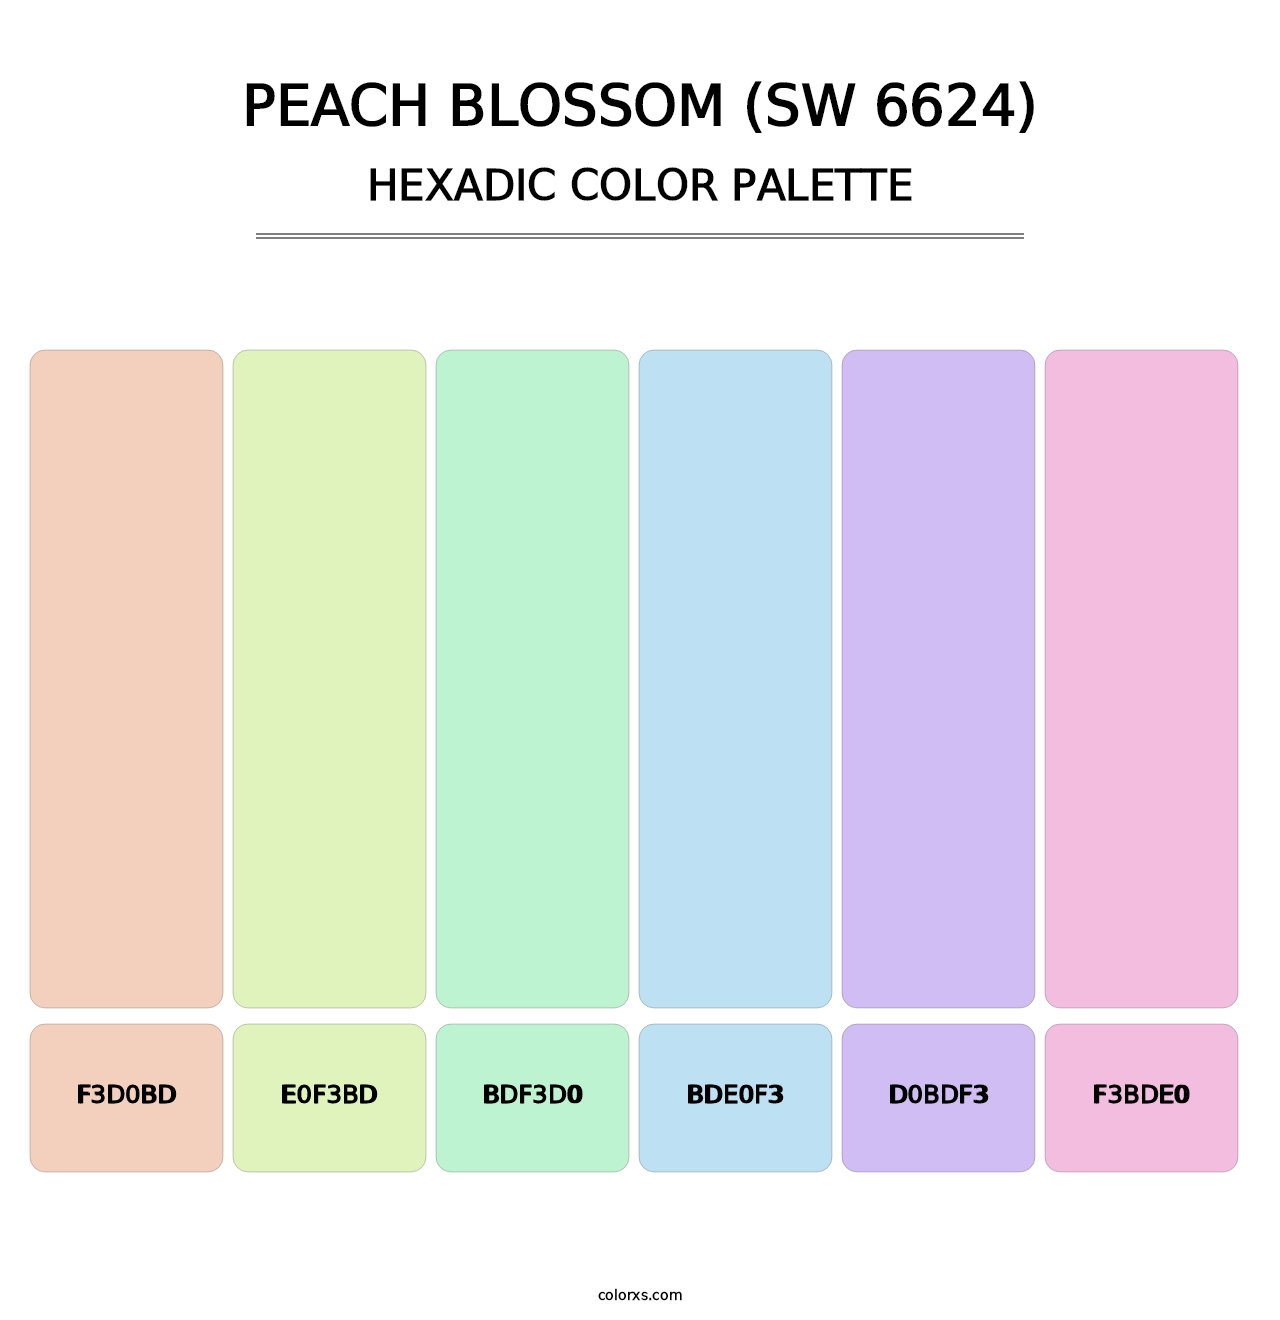 Peach Blossom (SW 6624) - Hexadic Color Palette